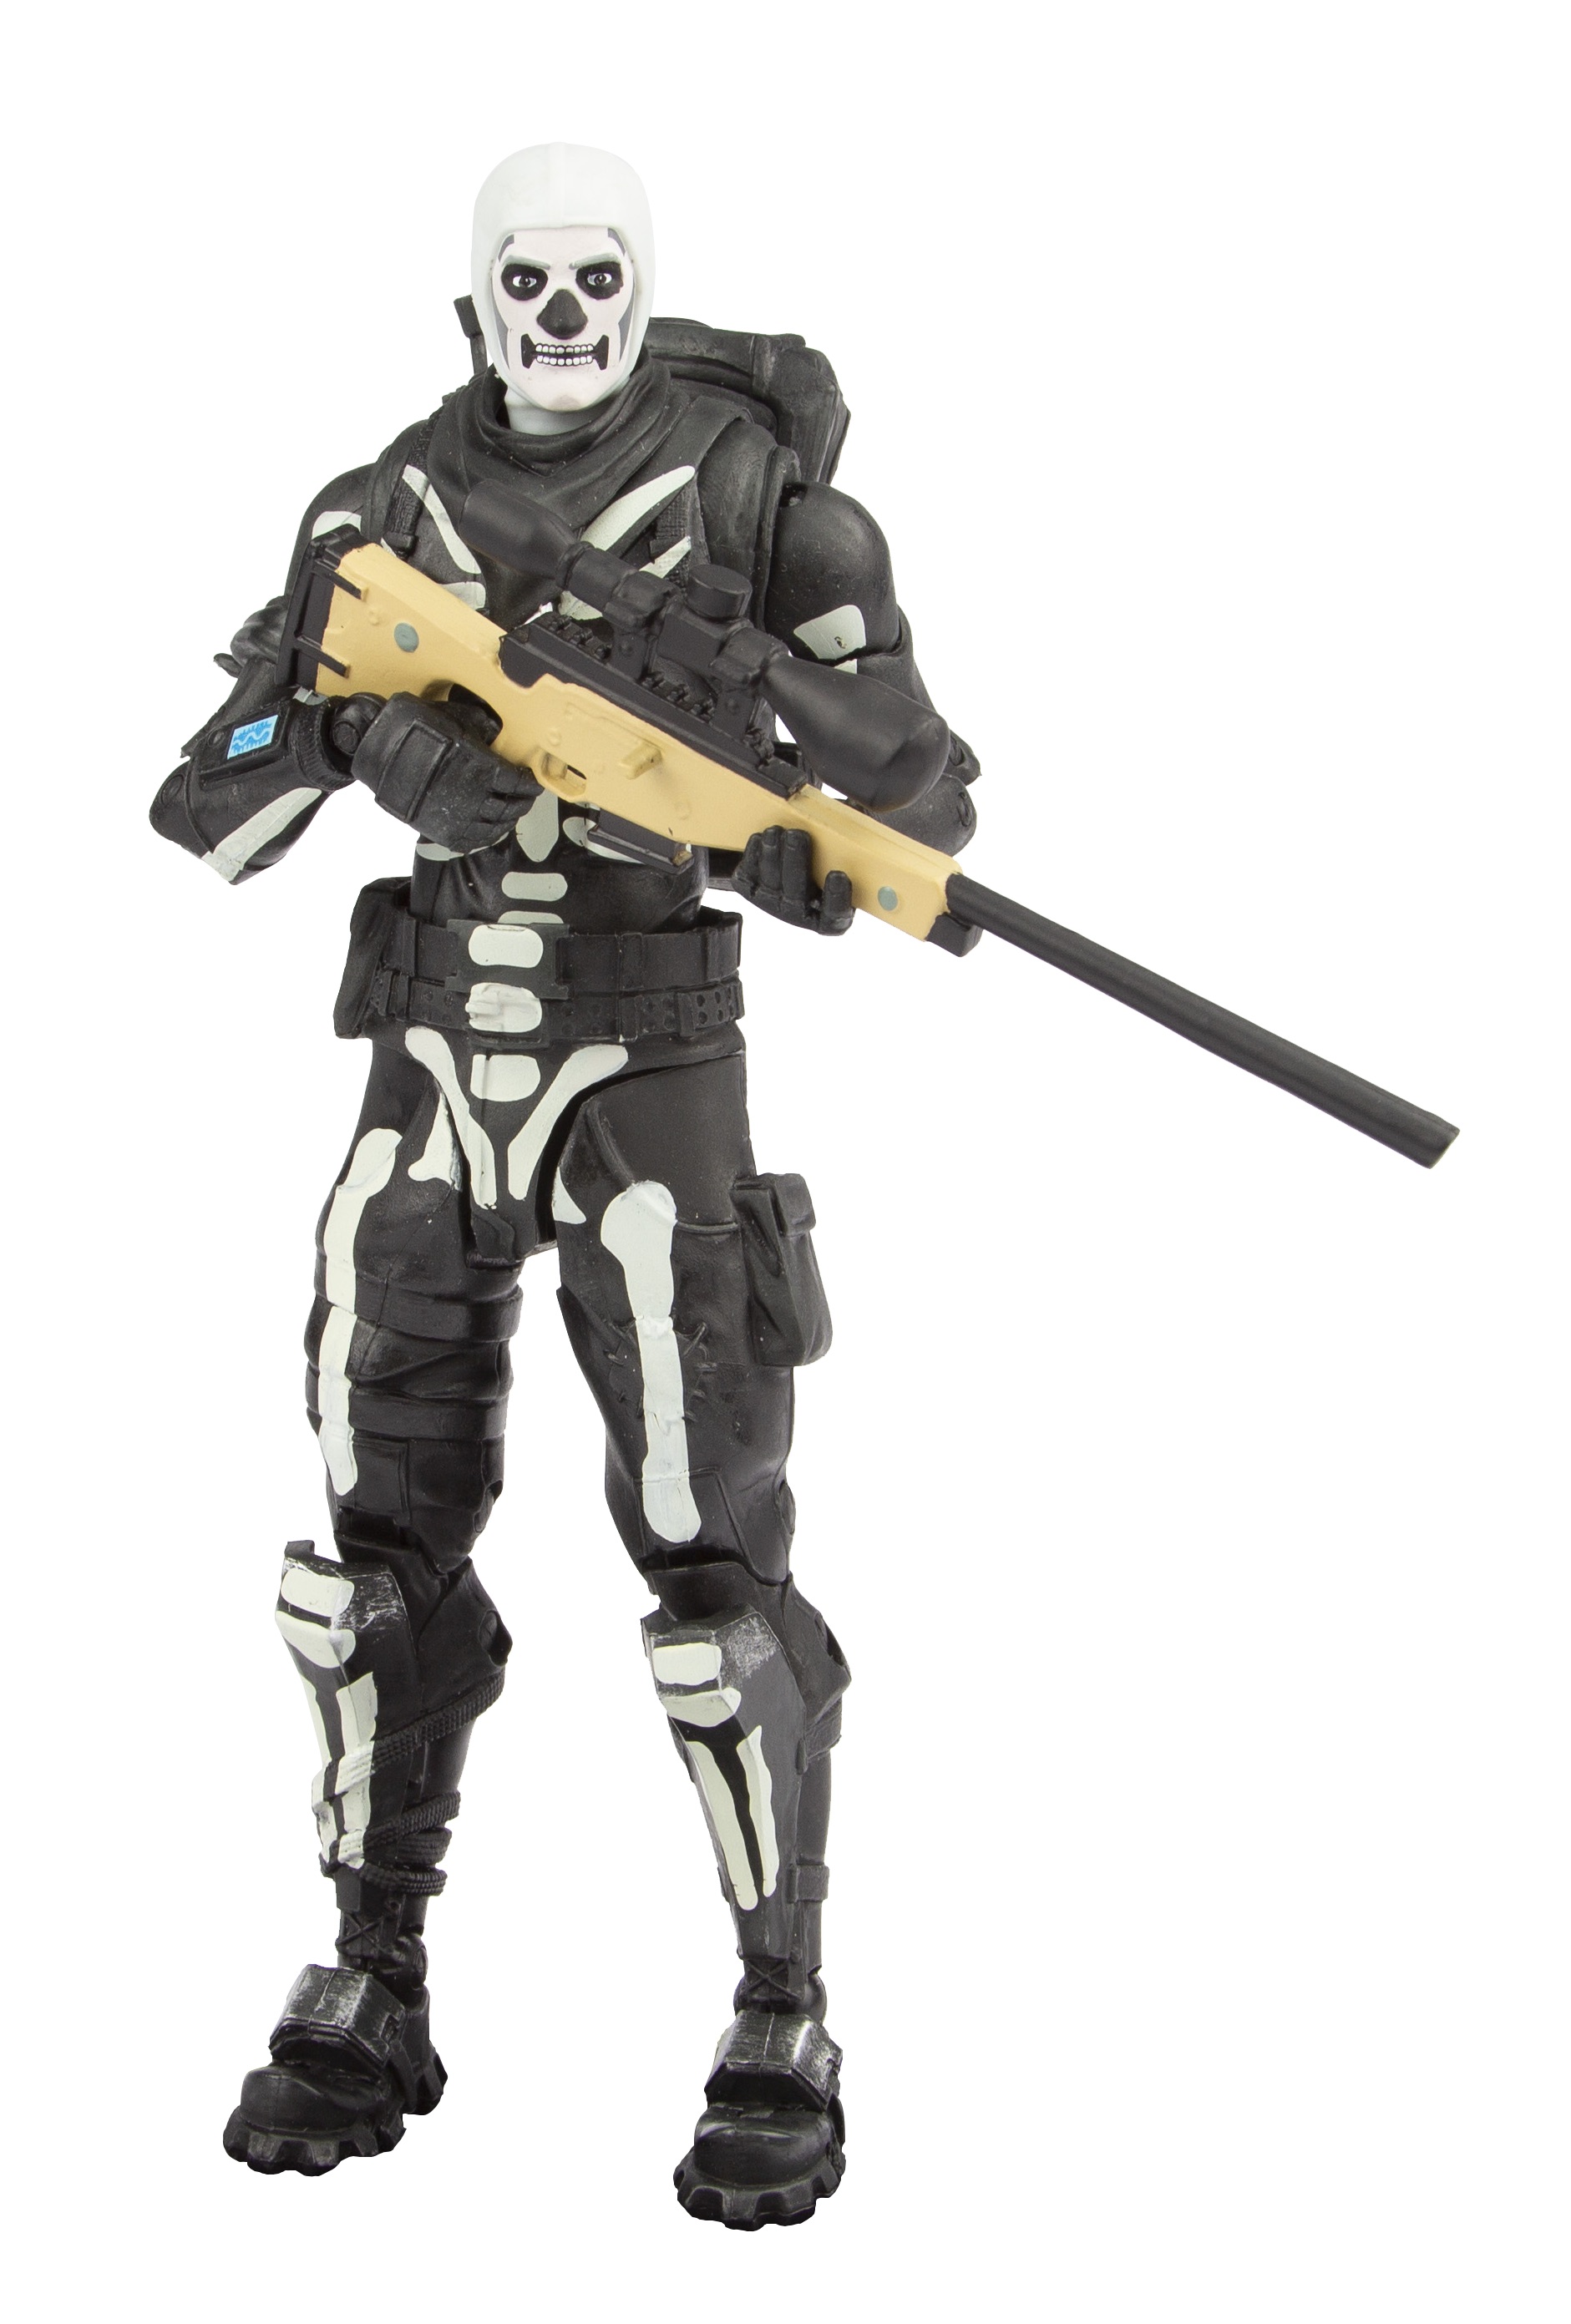 Fortnite Skull Trooper 7 Inch Action Figure by McFarlane Toys for sale online 